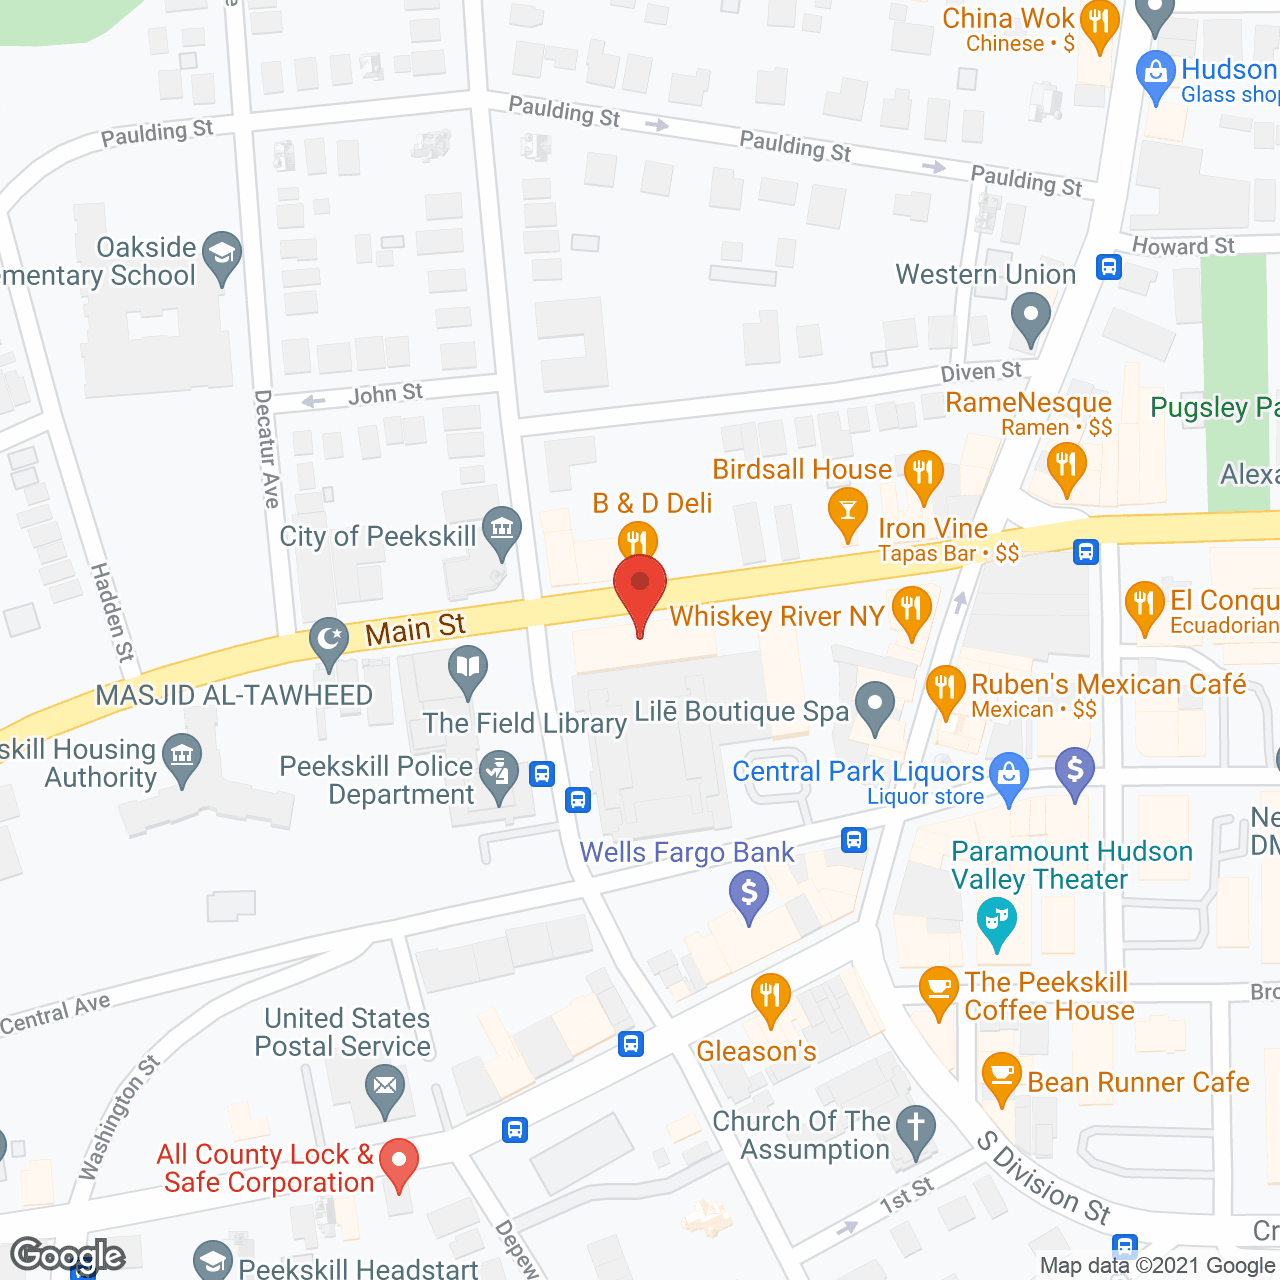 Peekskill Plaza Apartments in google map